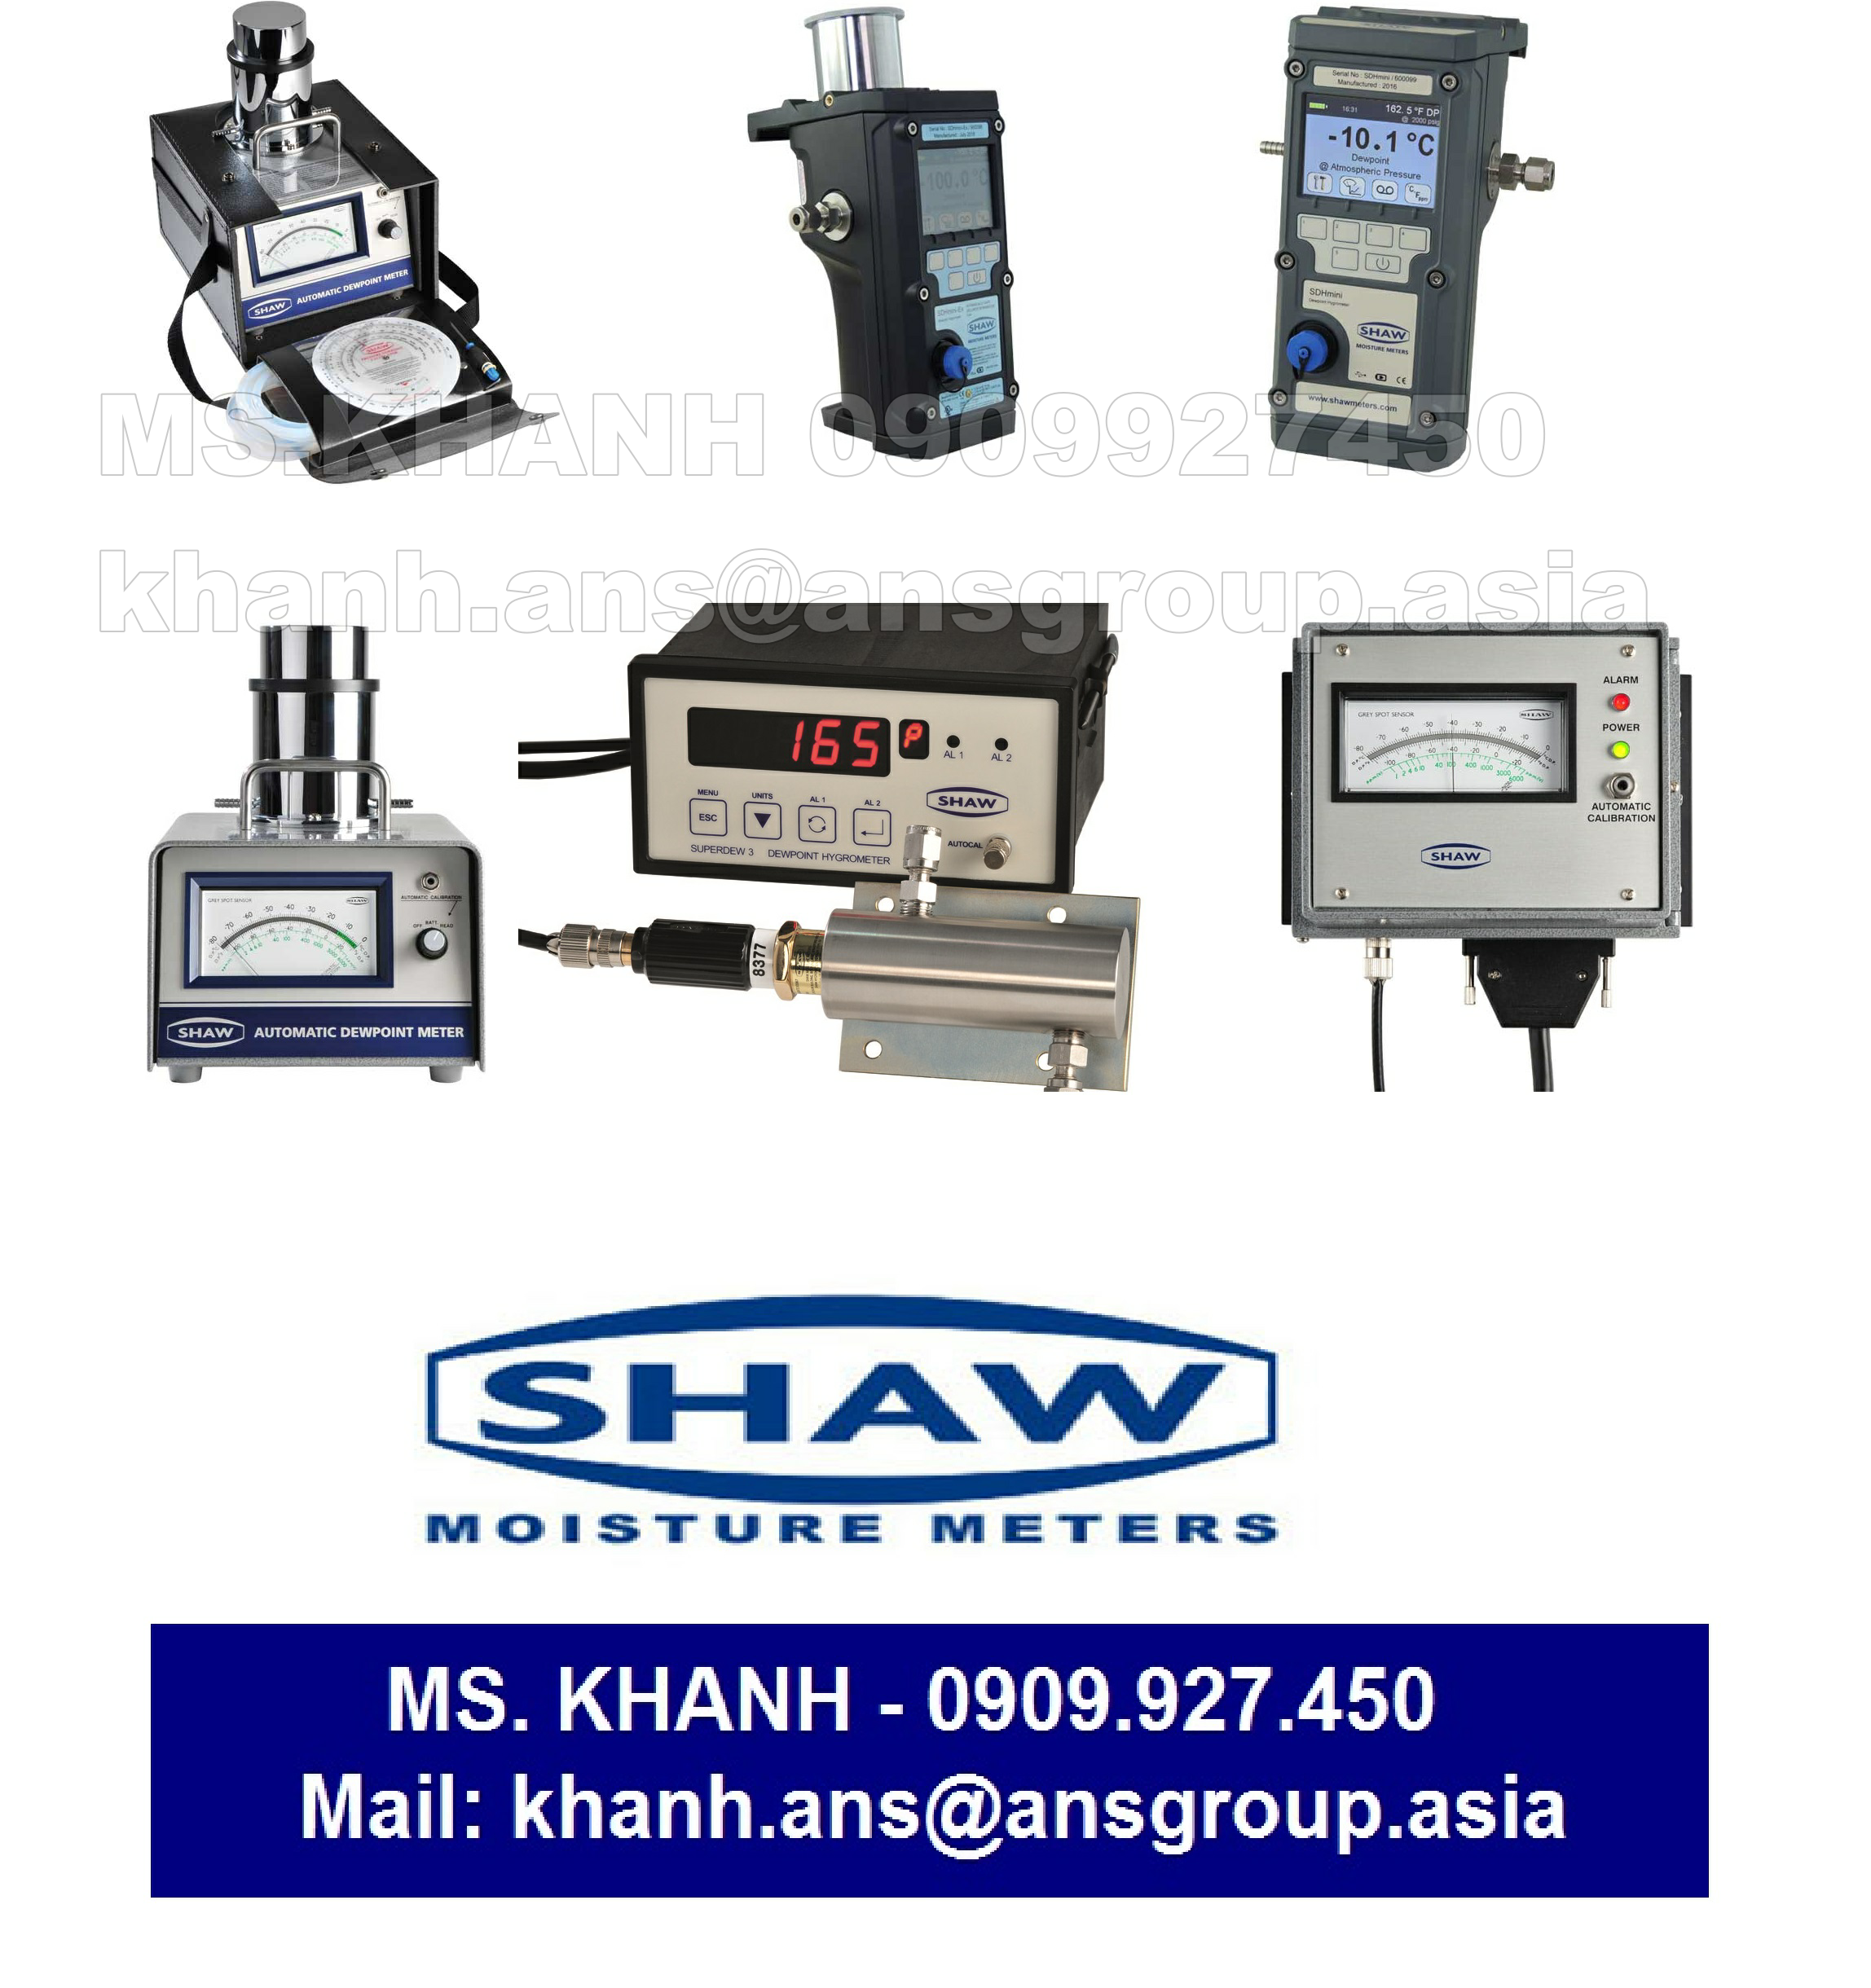 may-do-do-am-shaw-mini-dewpoint-hygrometer-measurement-sdhmini-g-shaw-vietnam.png